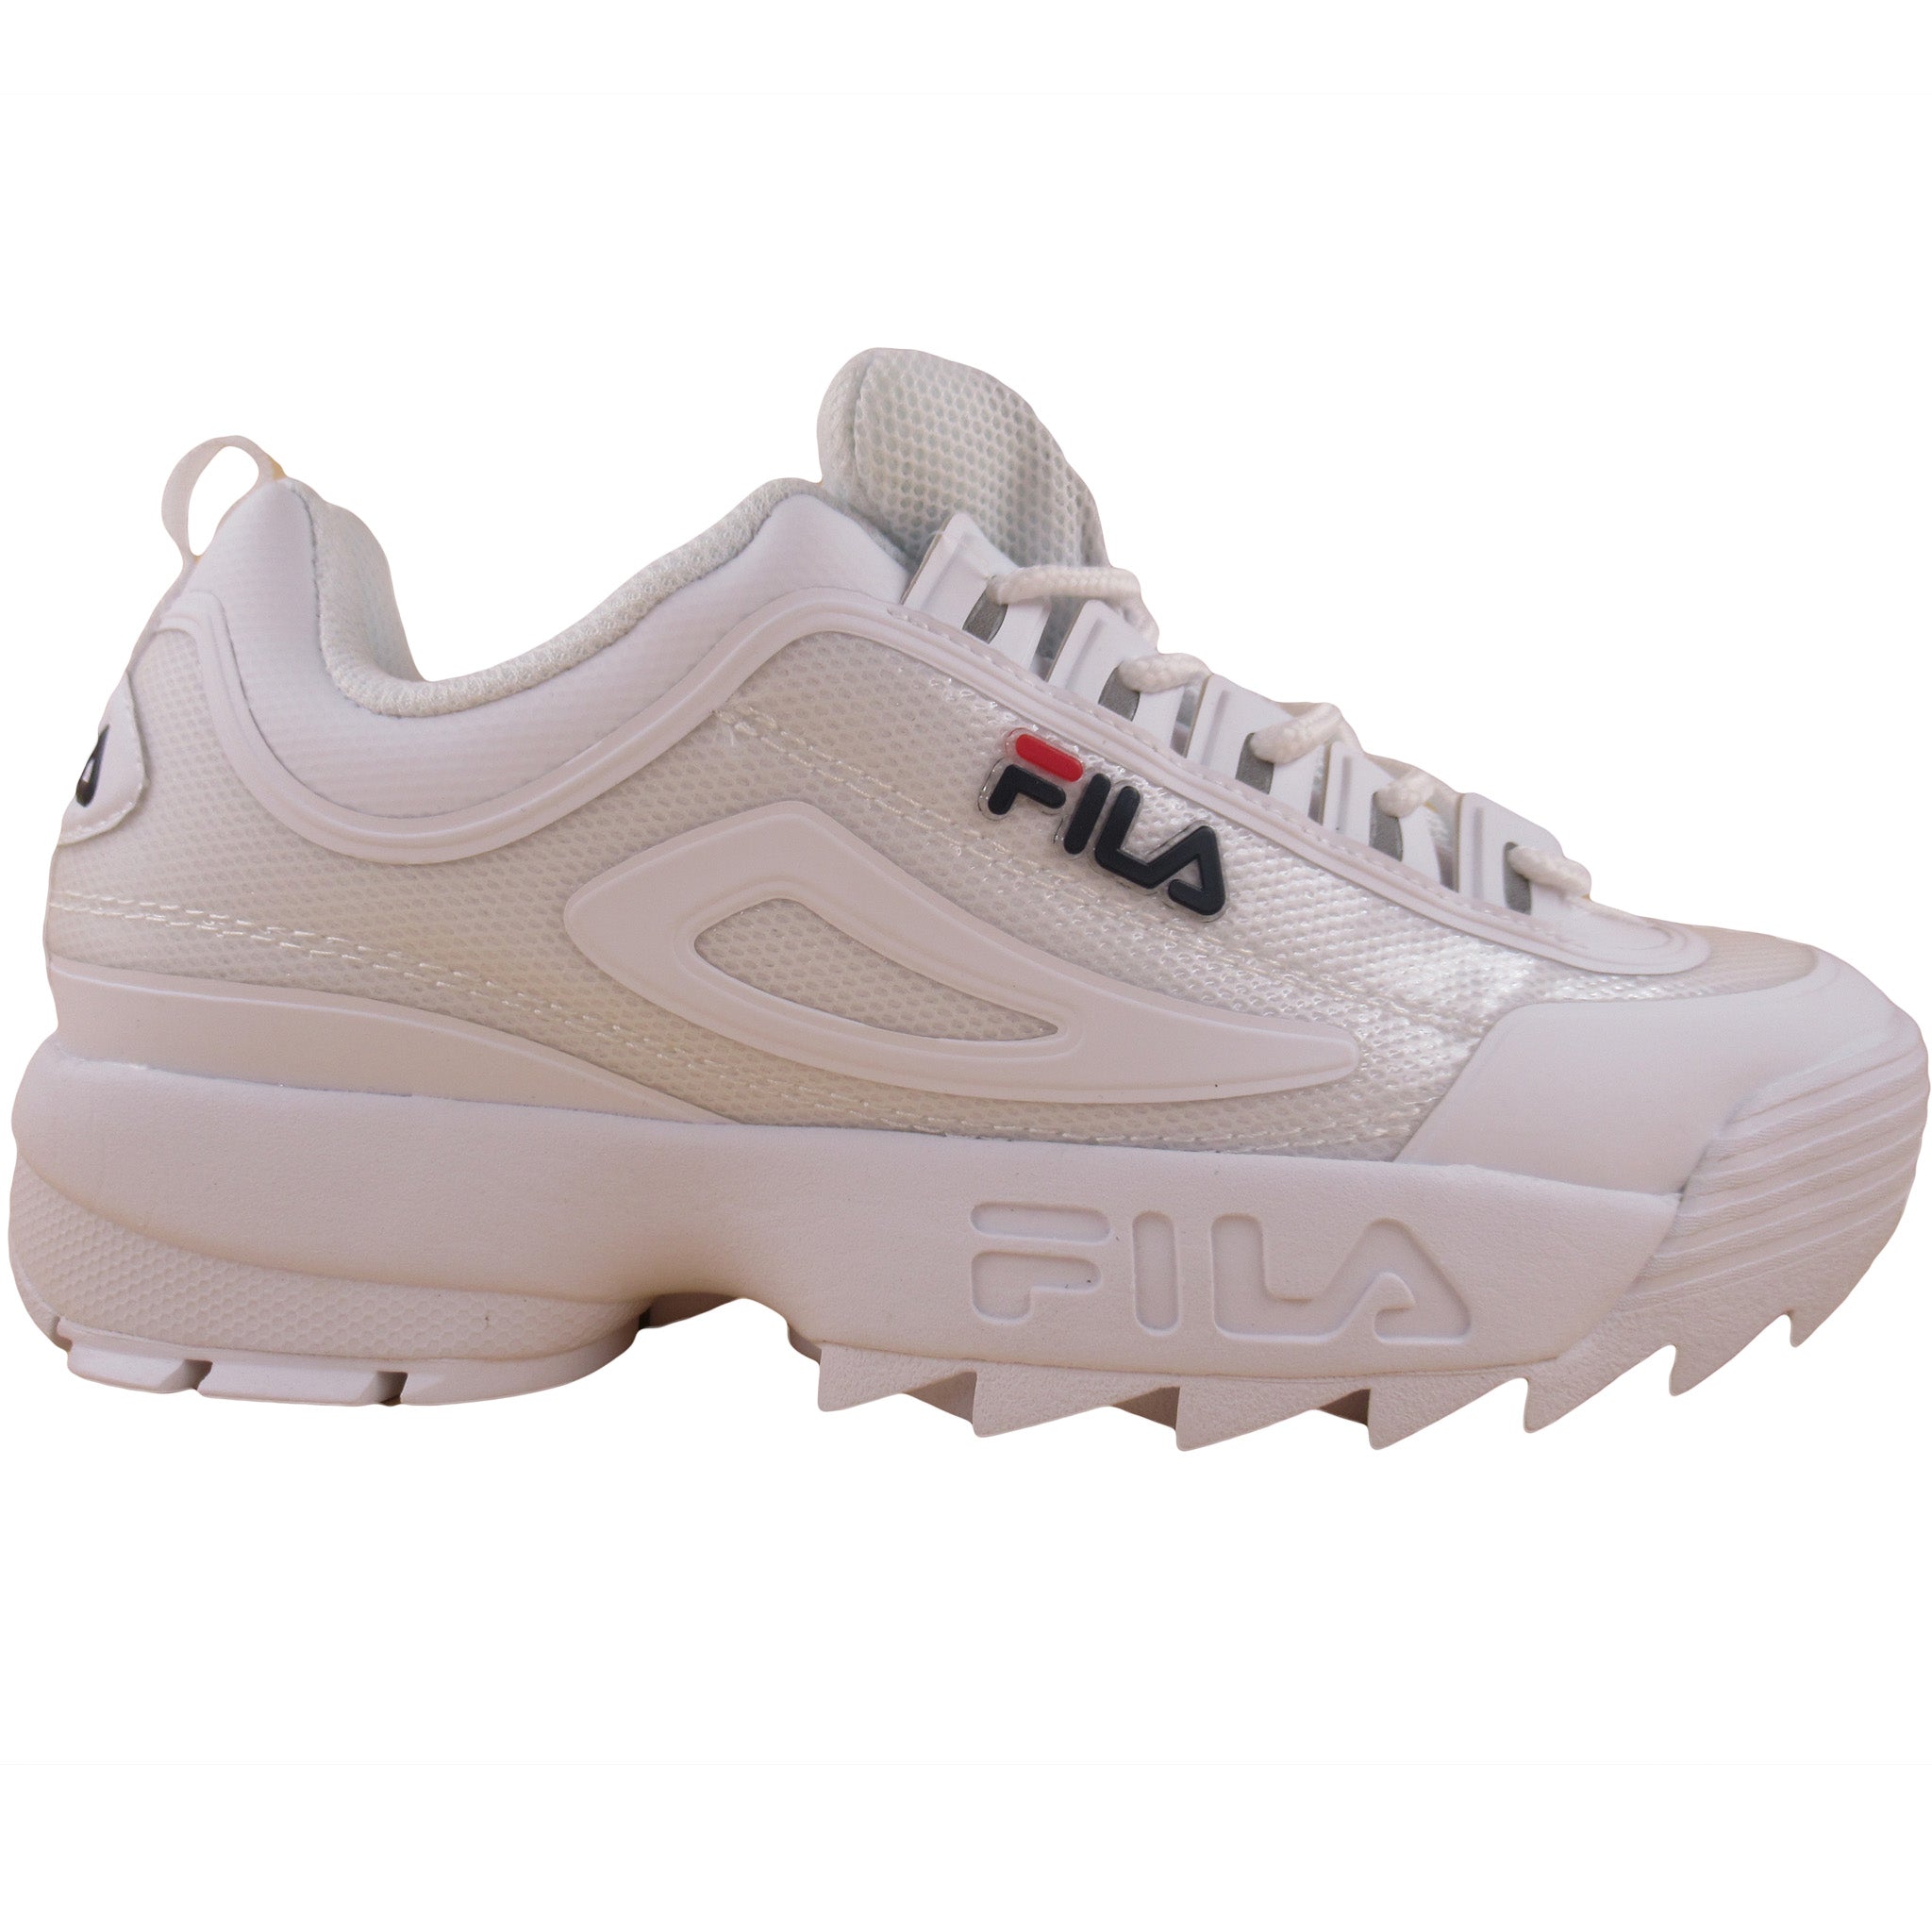 Fila Men's Disruptor II Premium Athletic Shoes